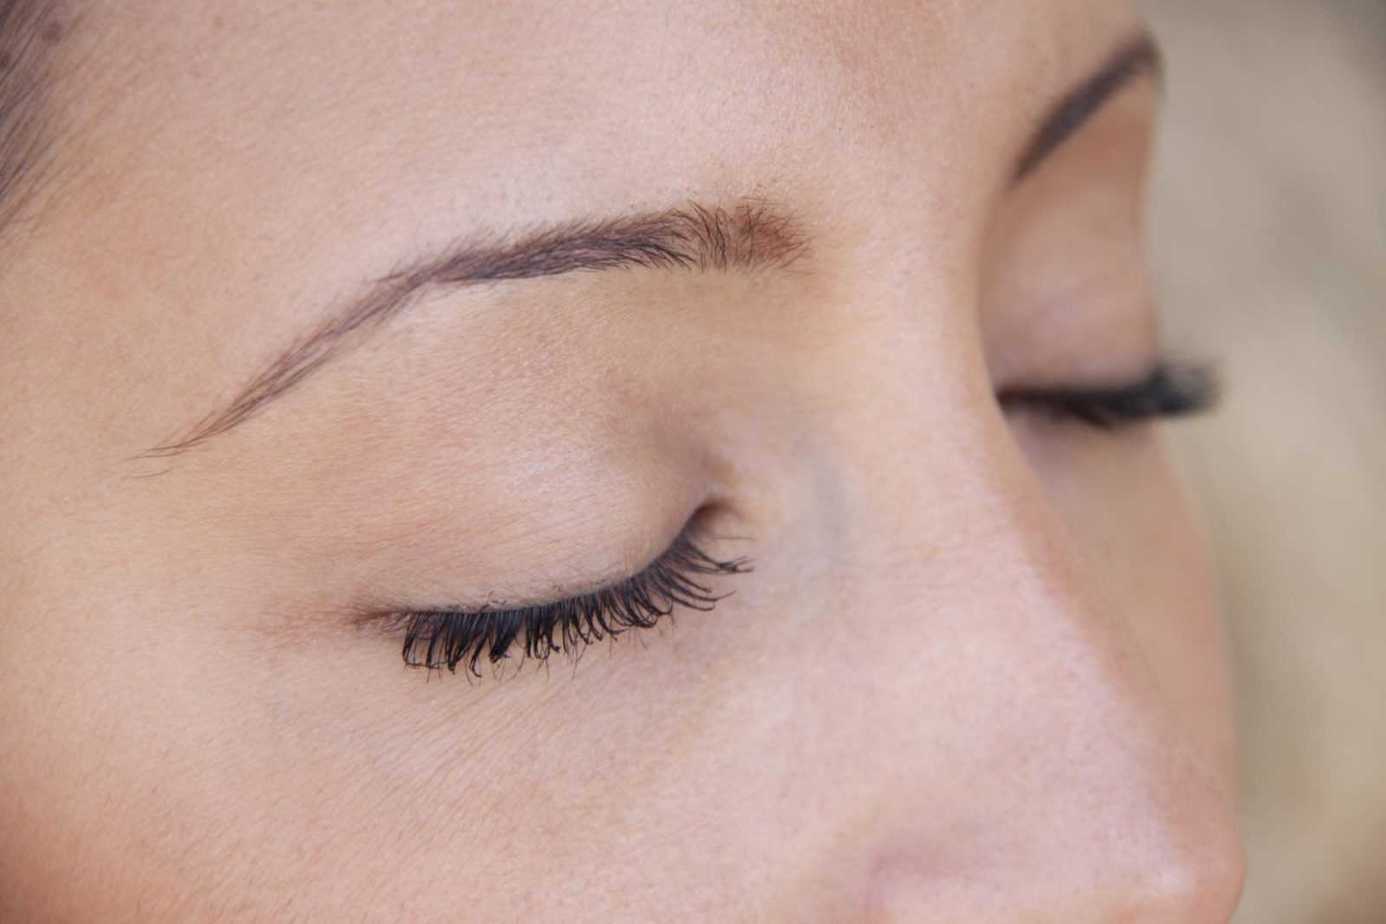 Eyebrow Transplants – Facial Hair Treatment Isn’t Just For Men